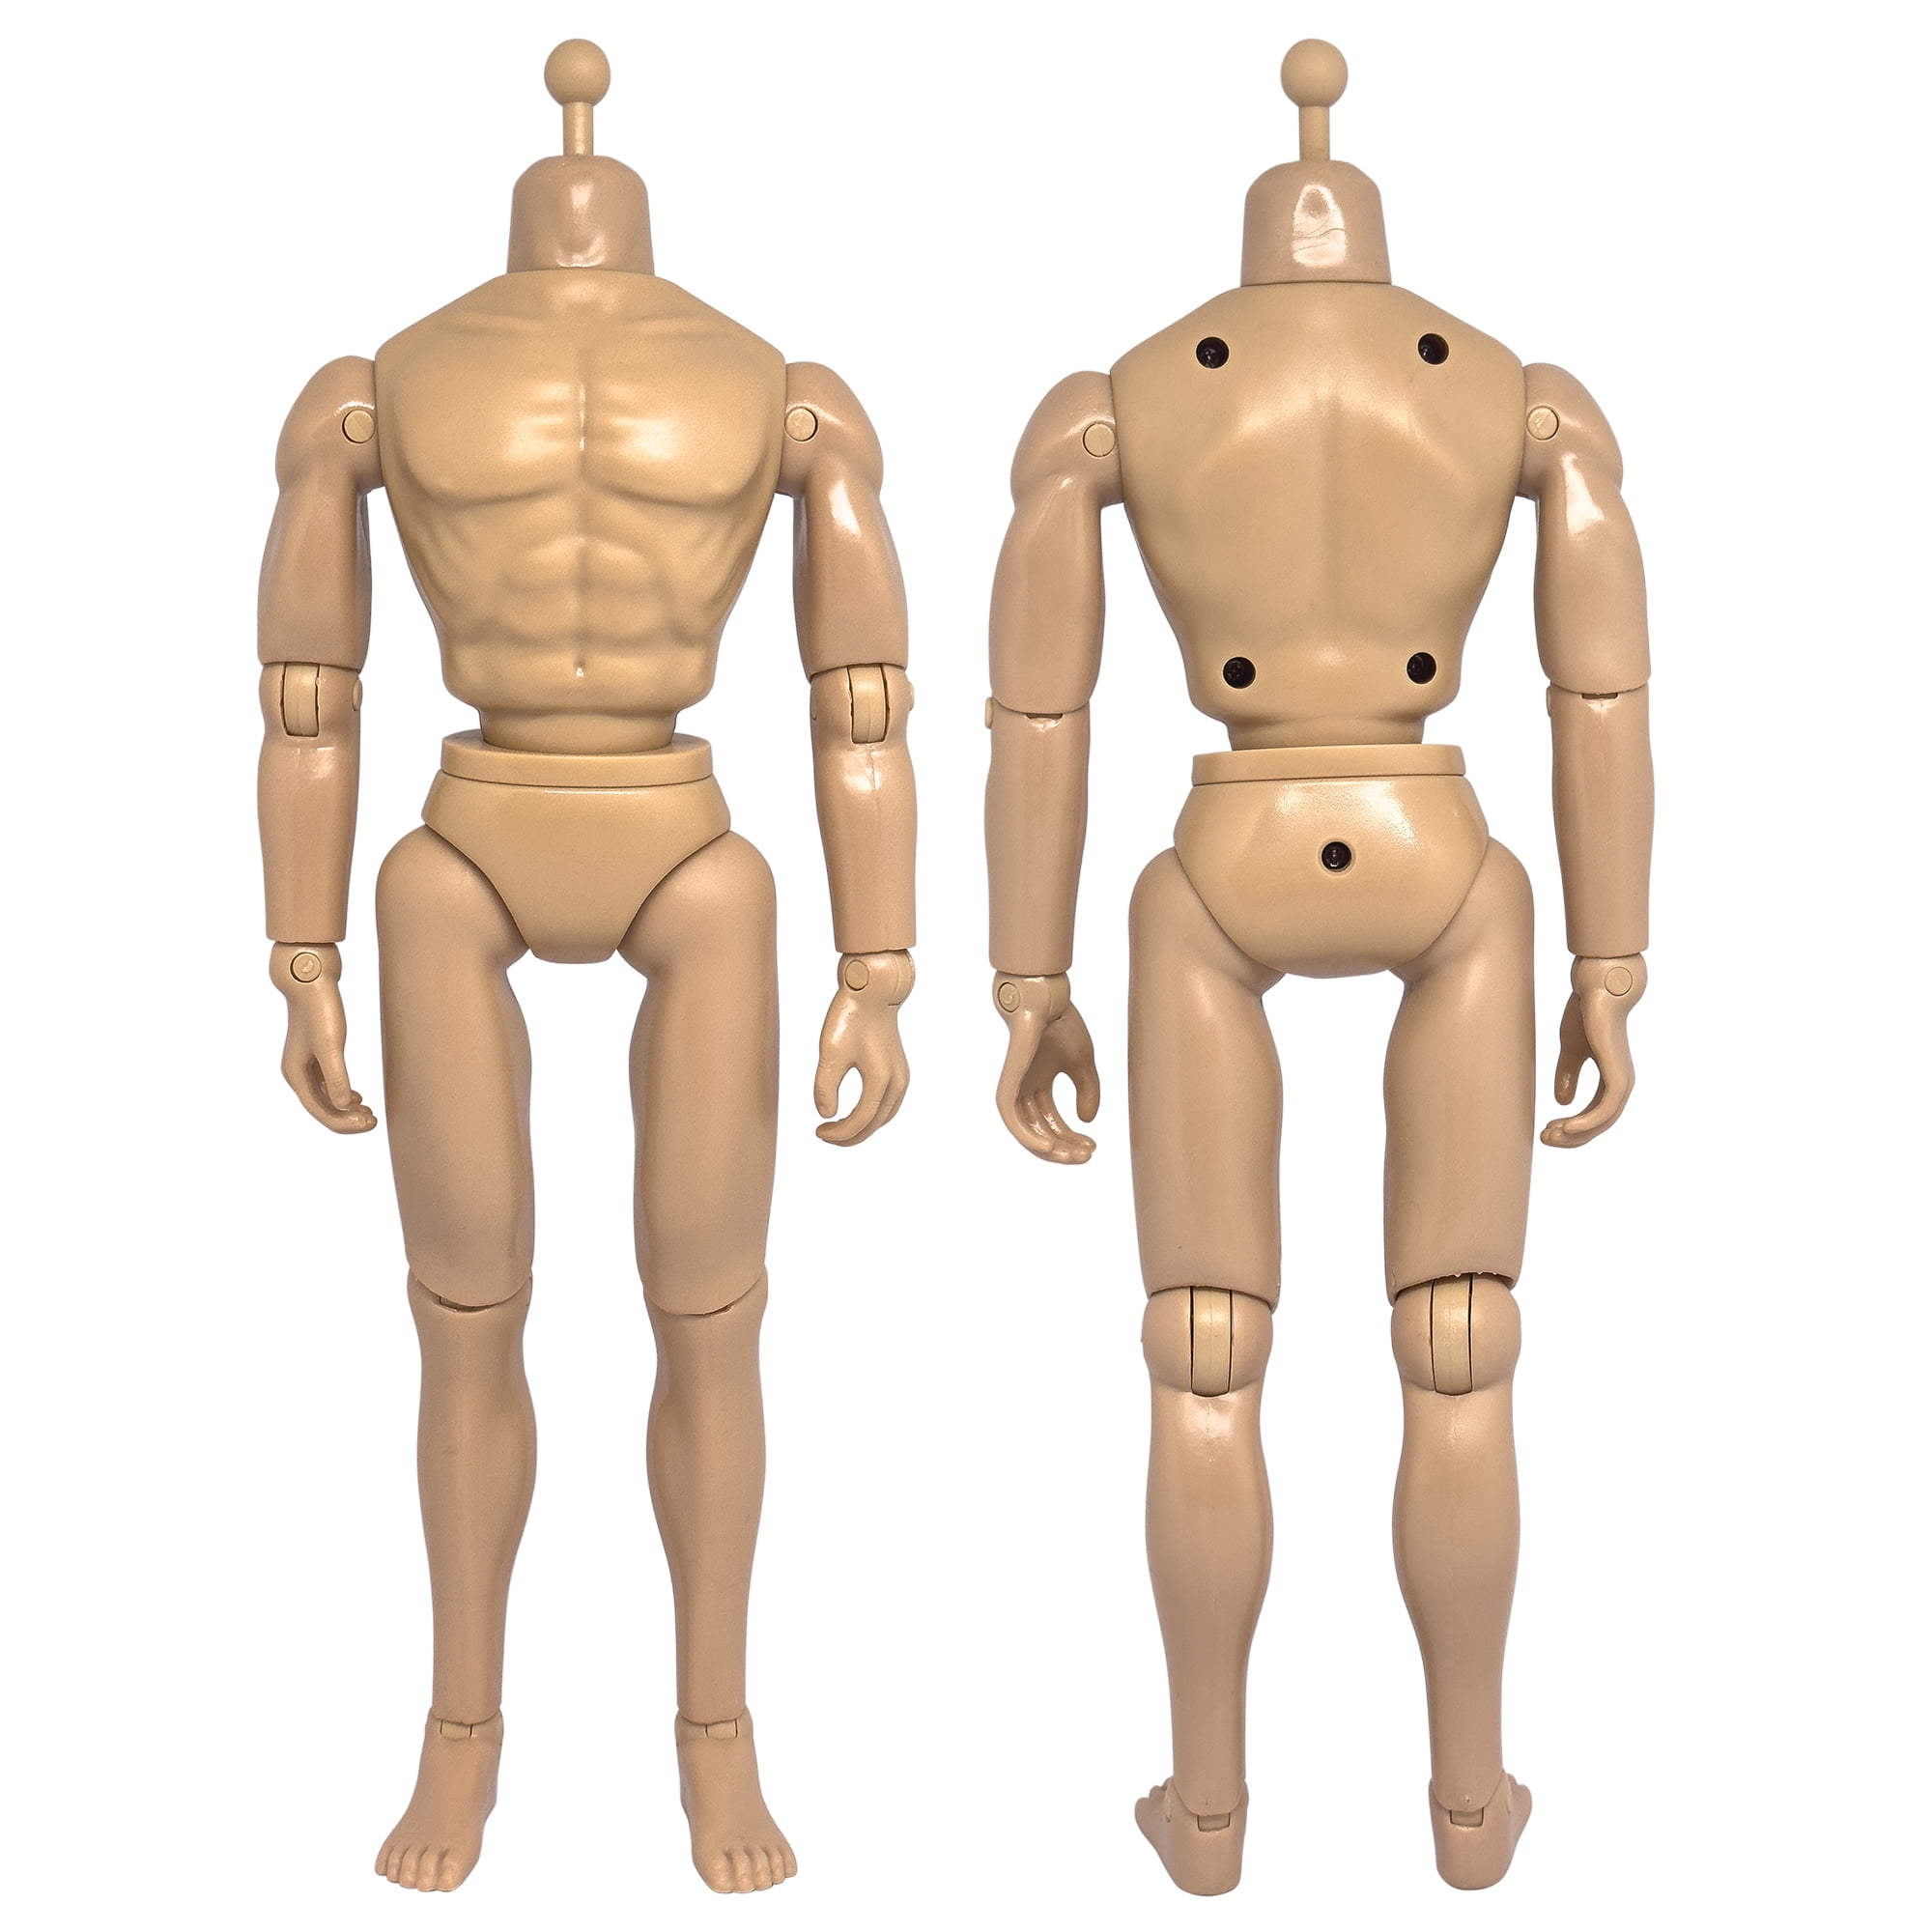 1/6 Scale Male Action Figure Body 12 Inch Male Body Model Muscular